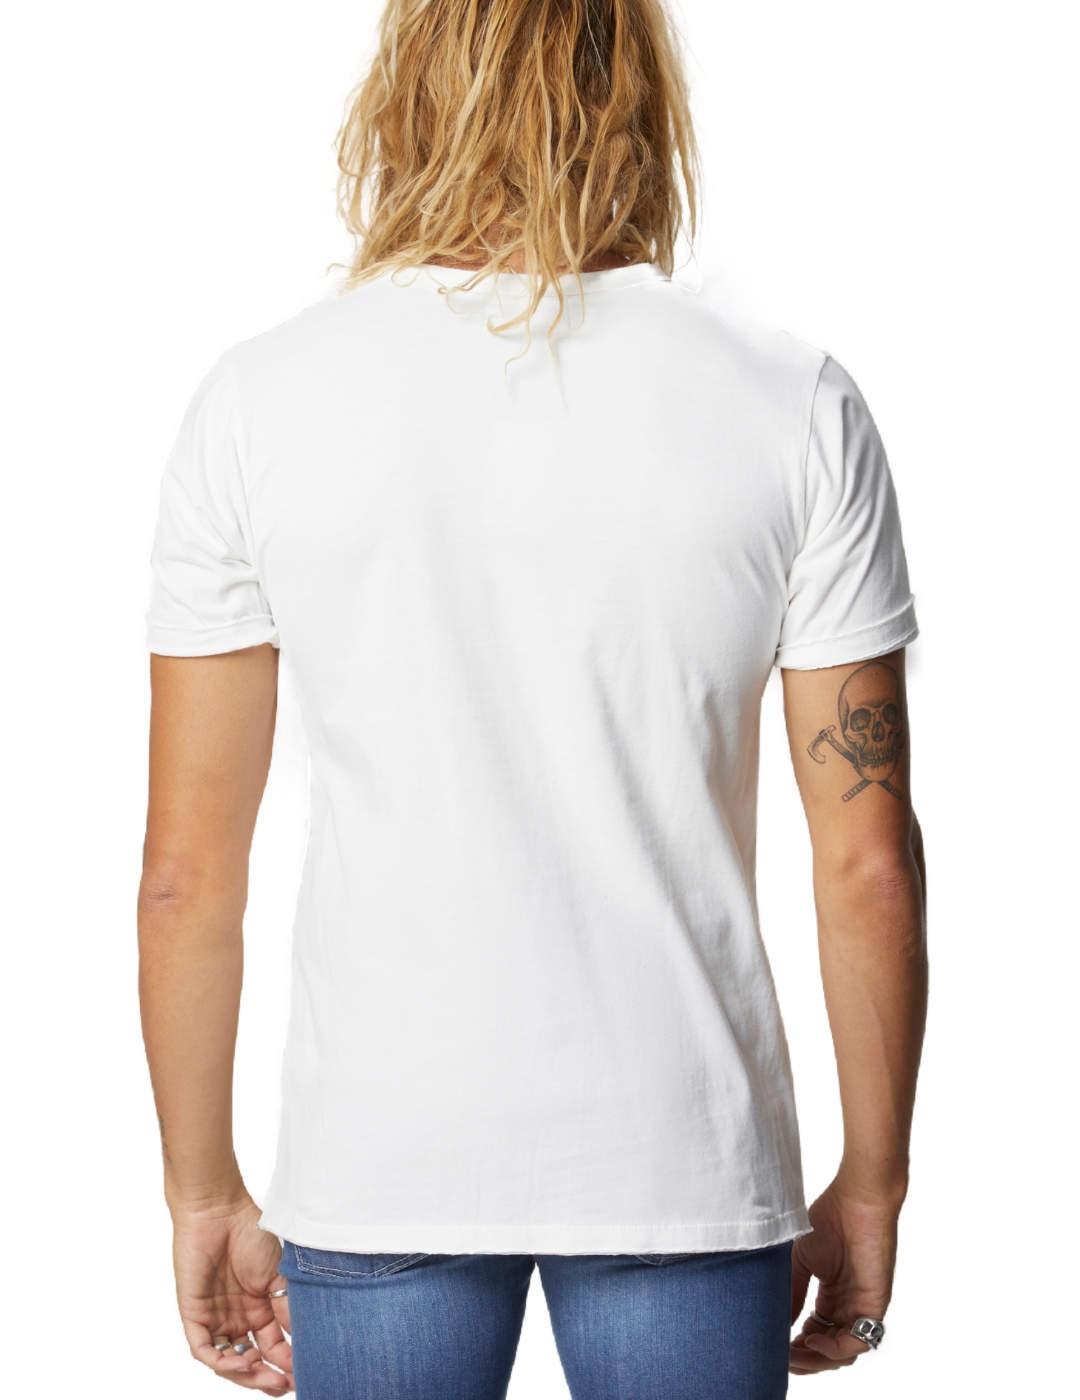 Camiseta Altonadock manga corta cuello redondo blanca hombre